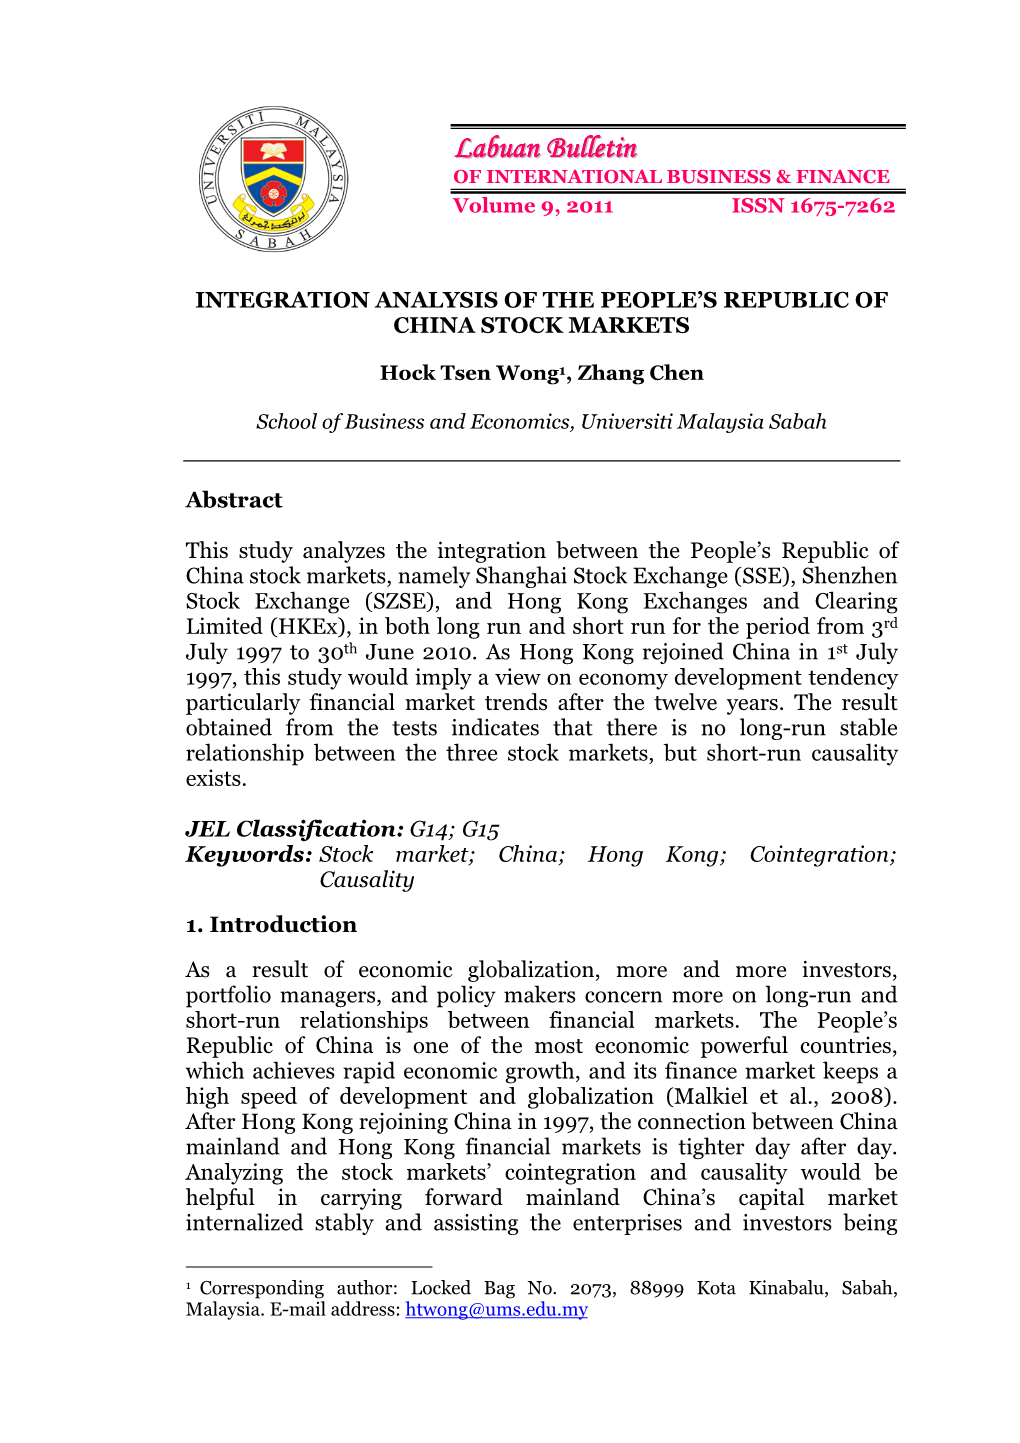 Labuan Bulletin of International Business & Finance, 9, 2011, 24 – 43